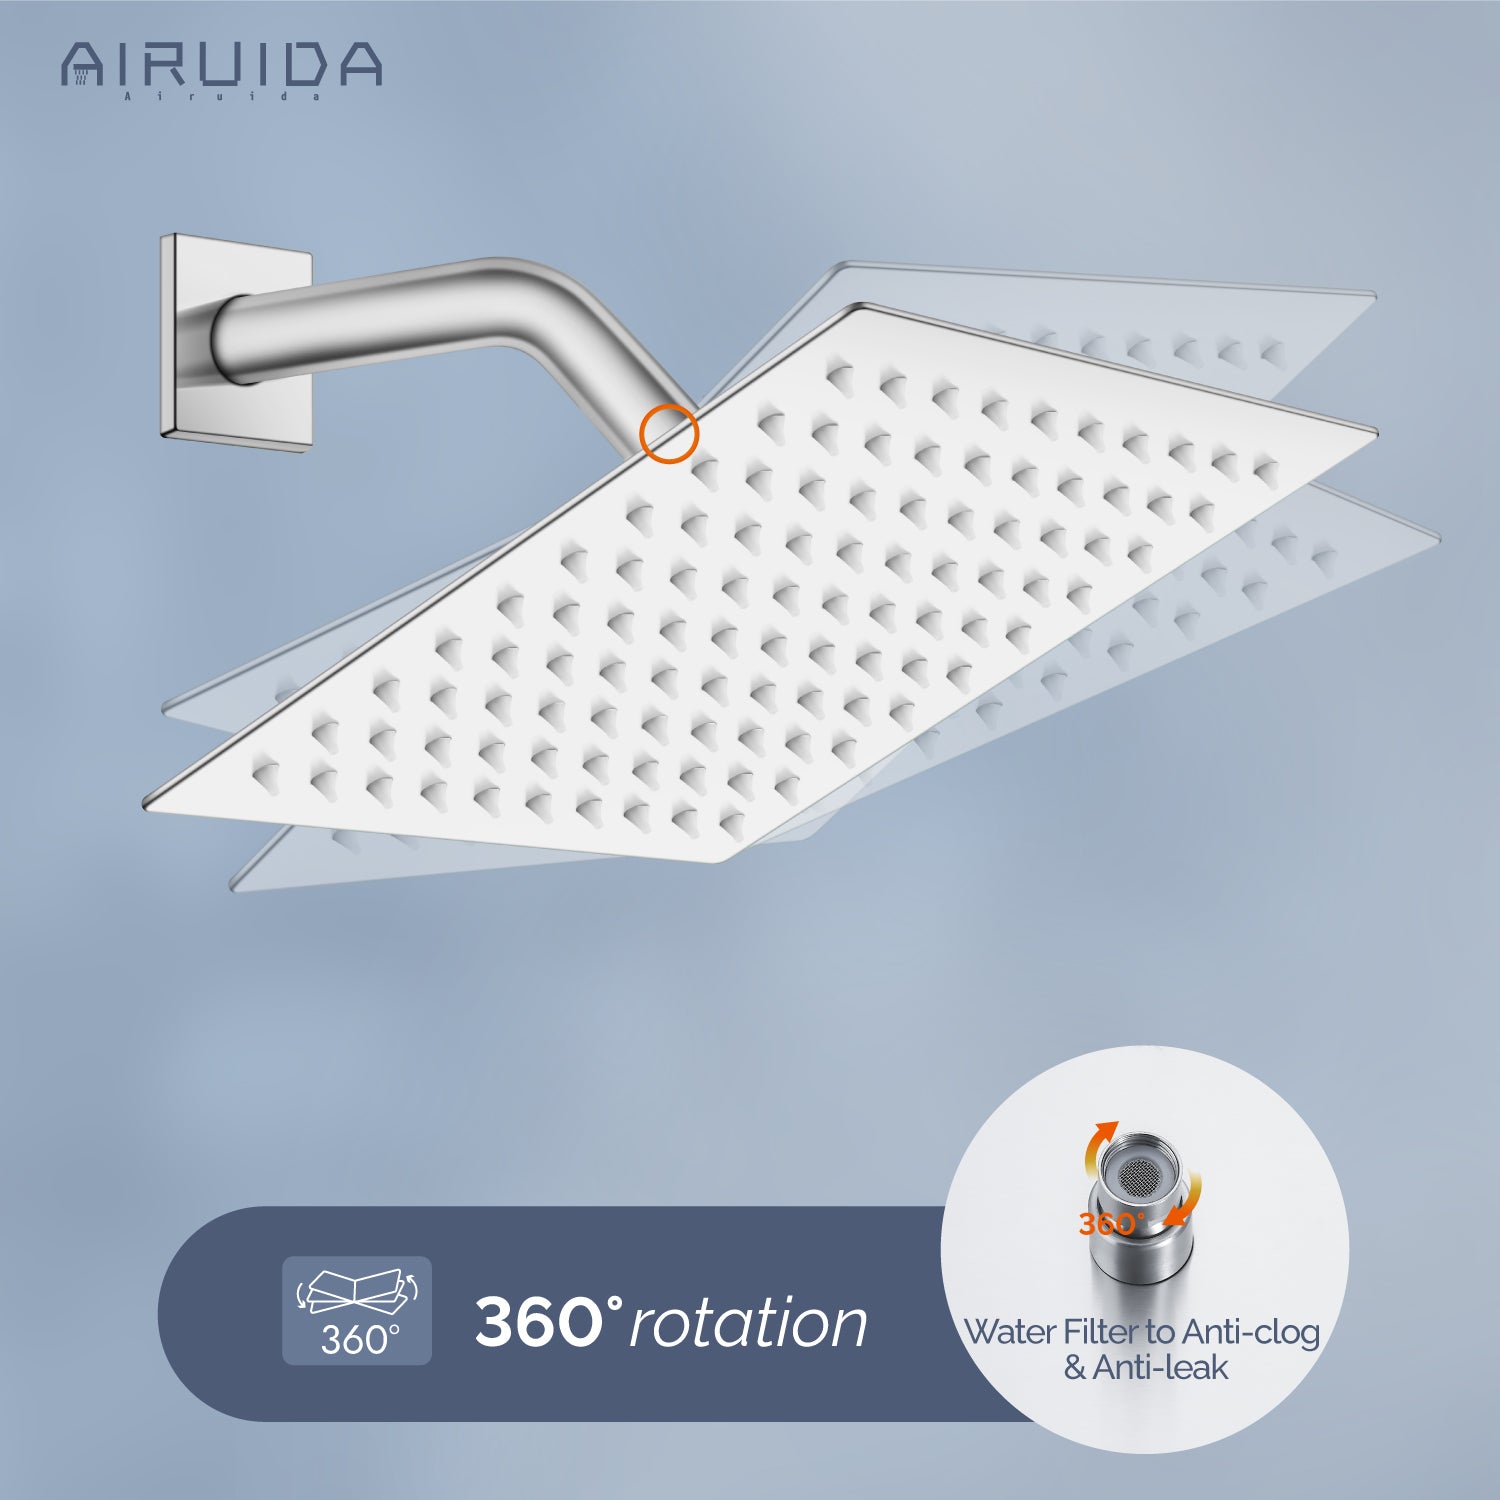 Airuida Shower Faucet Set Bathroom Rain Shower System 8 Inch Square Showerhead Single Function Single Handle Shower Trim Kit With Thread Rough-in Valve